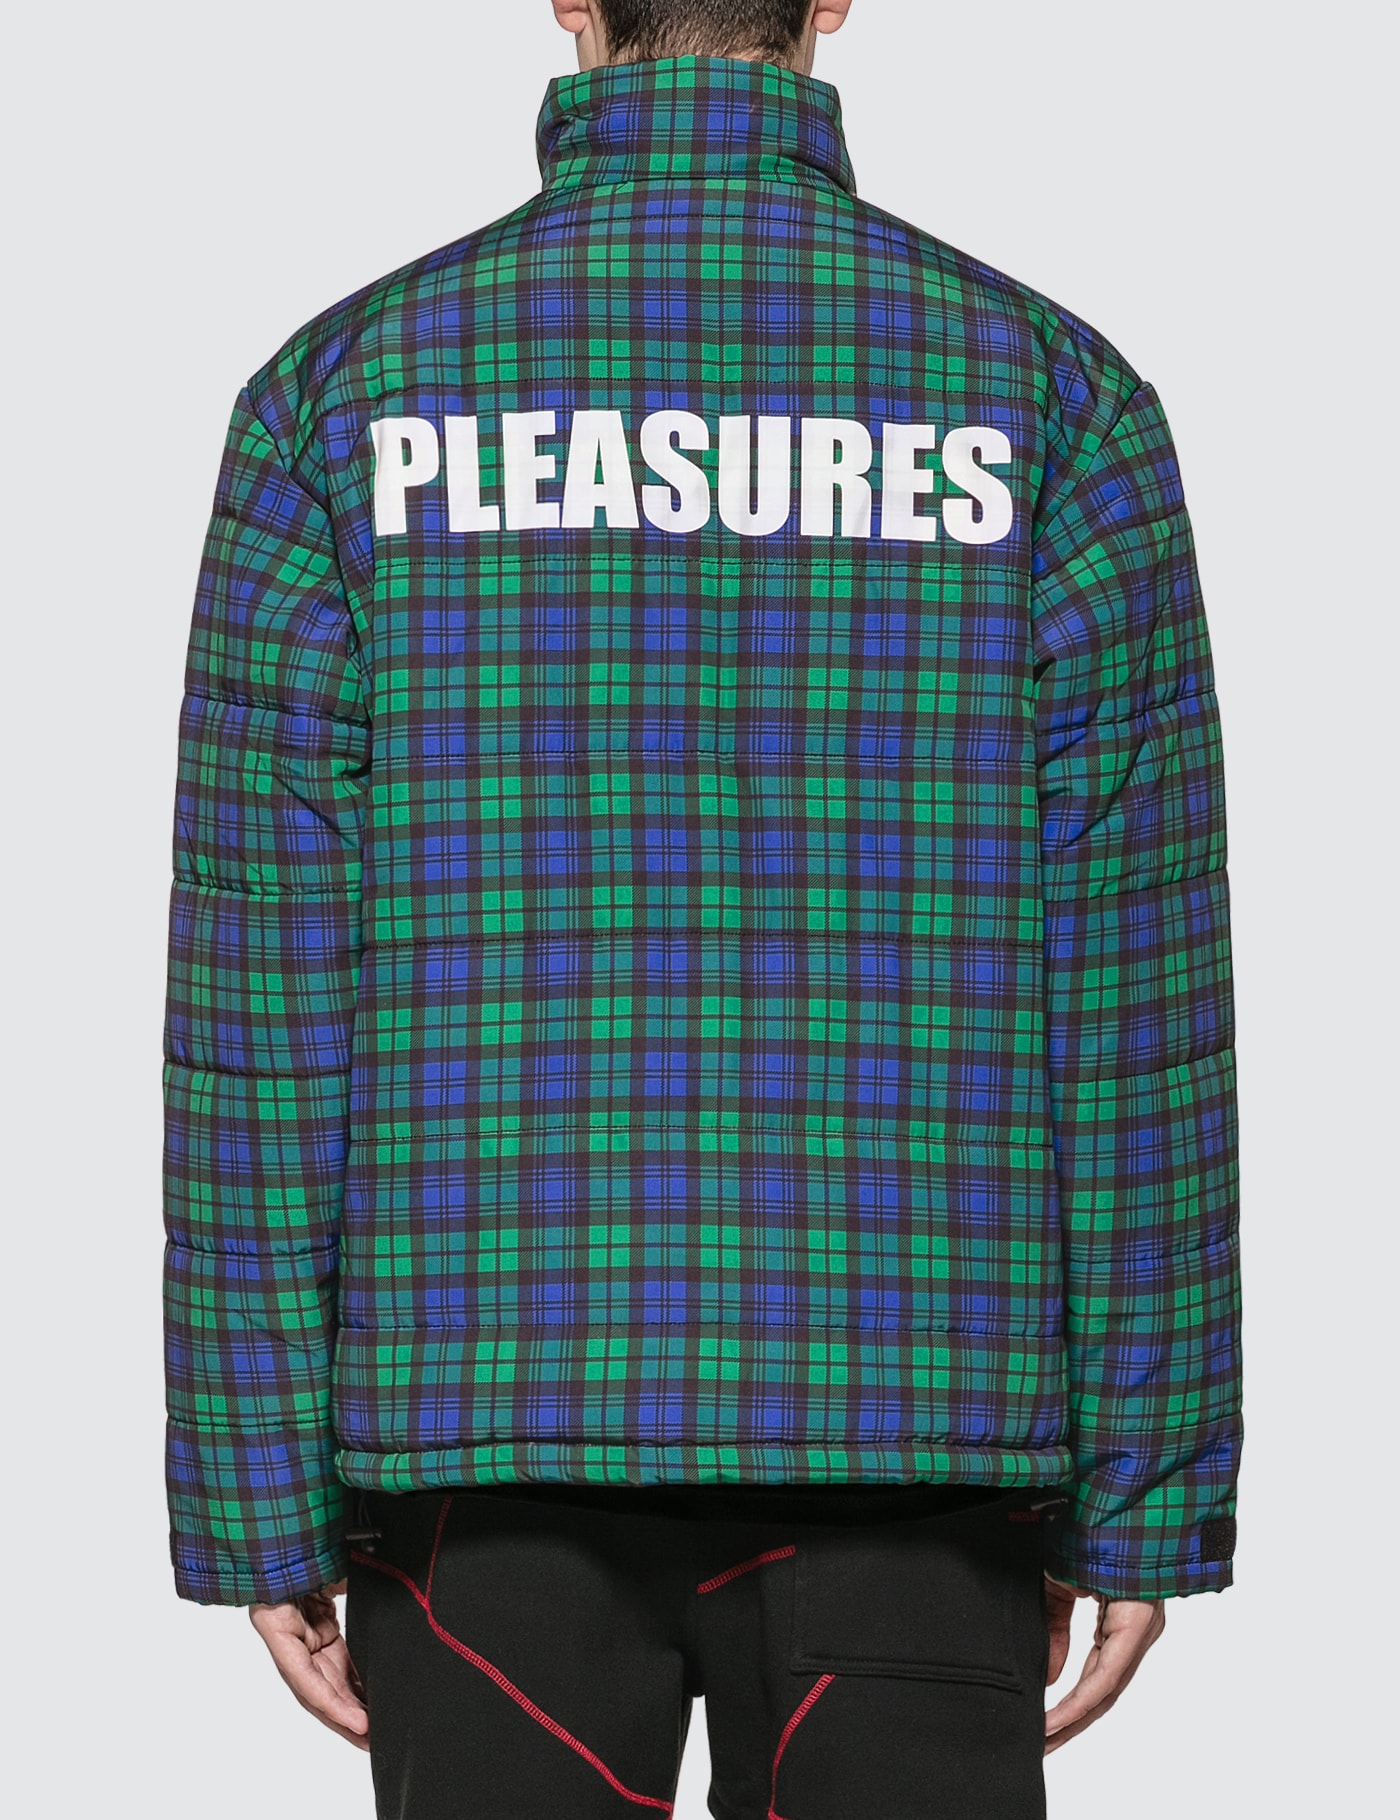 Pleasures - Decades Plaid Puffer Jacket | HBX